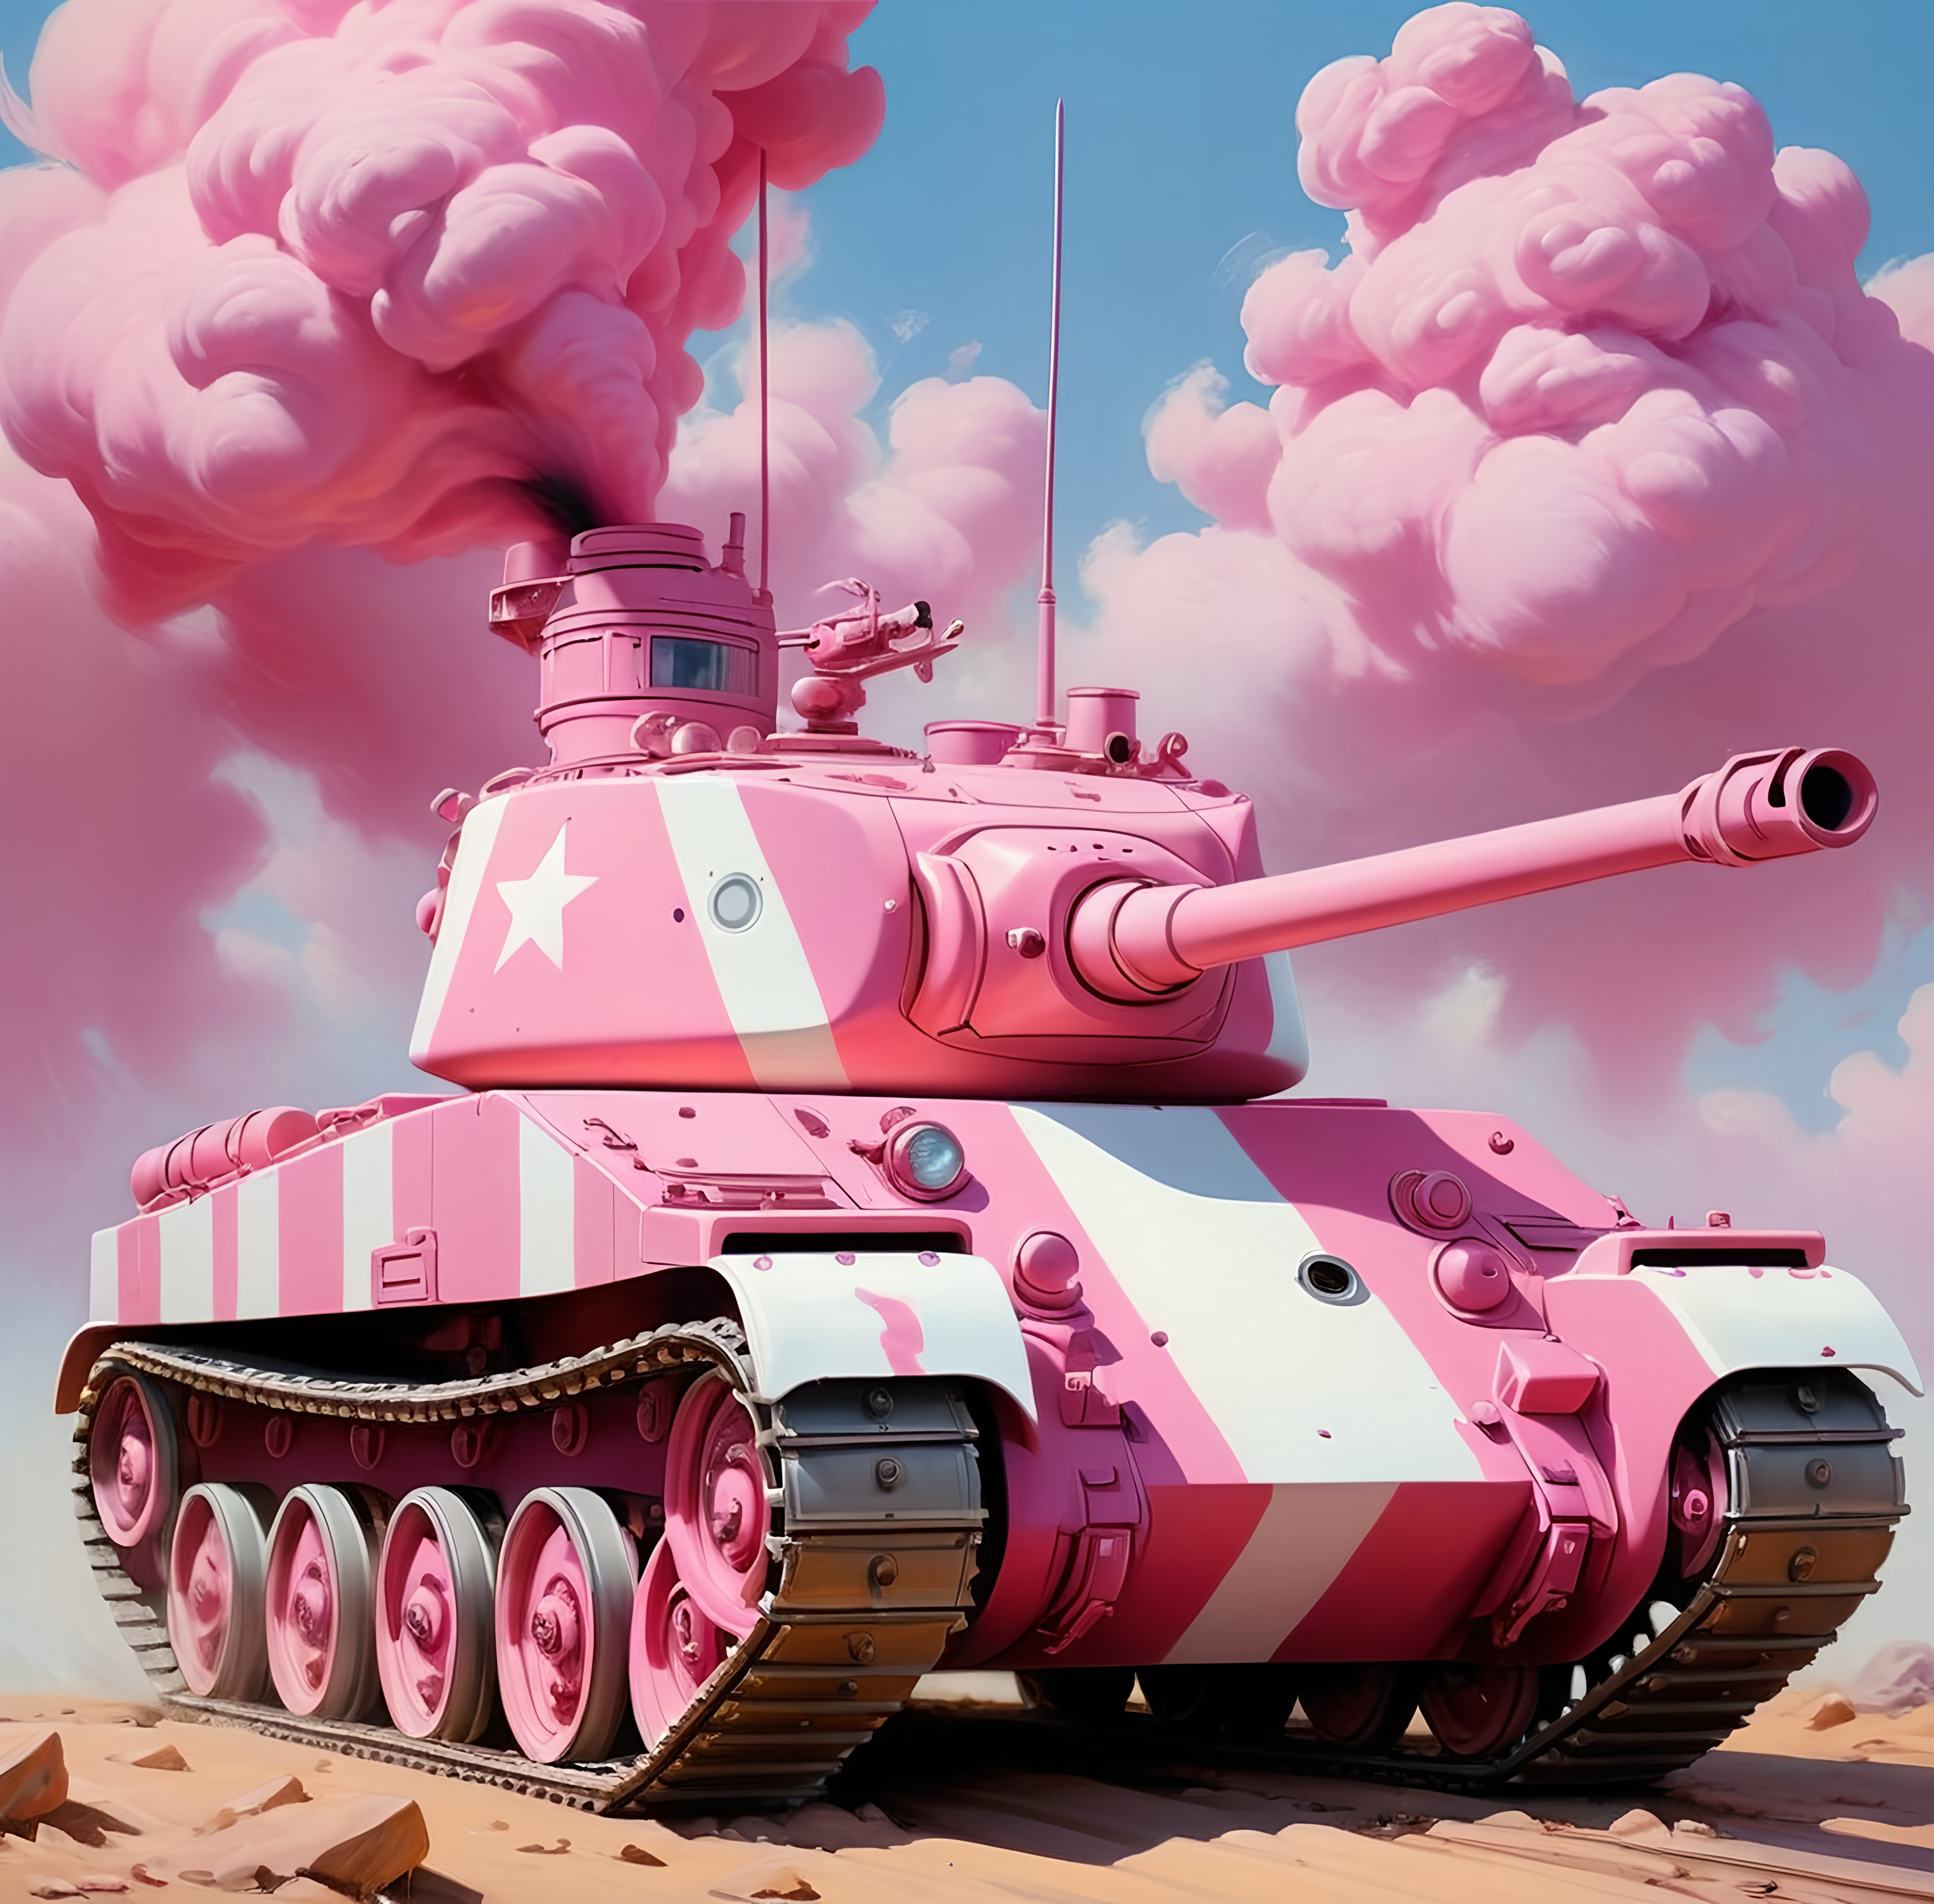 Cadenza on X: #tank #tanks #cute #pinkaesthetic #pink #pinks